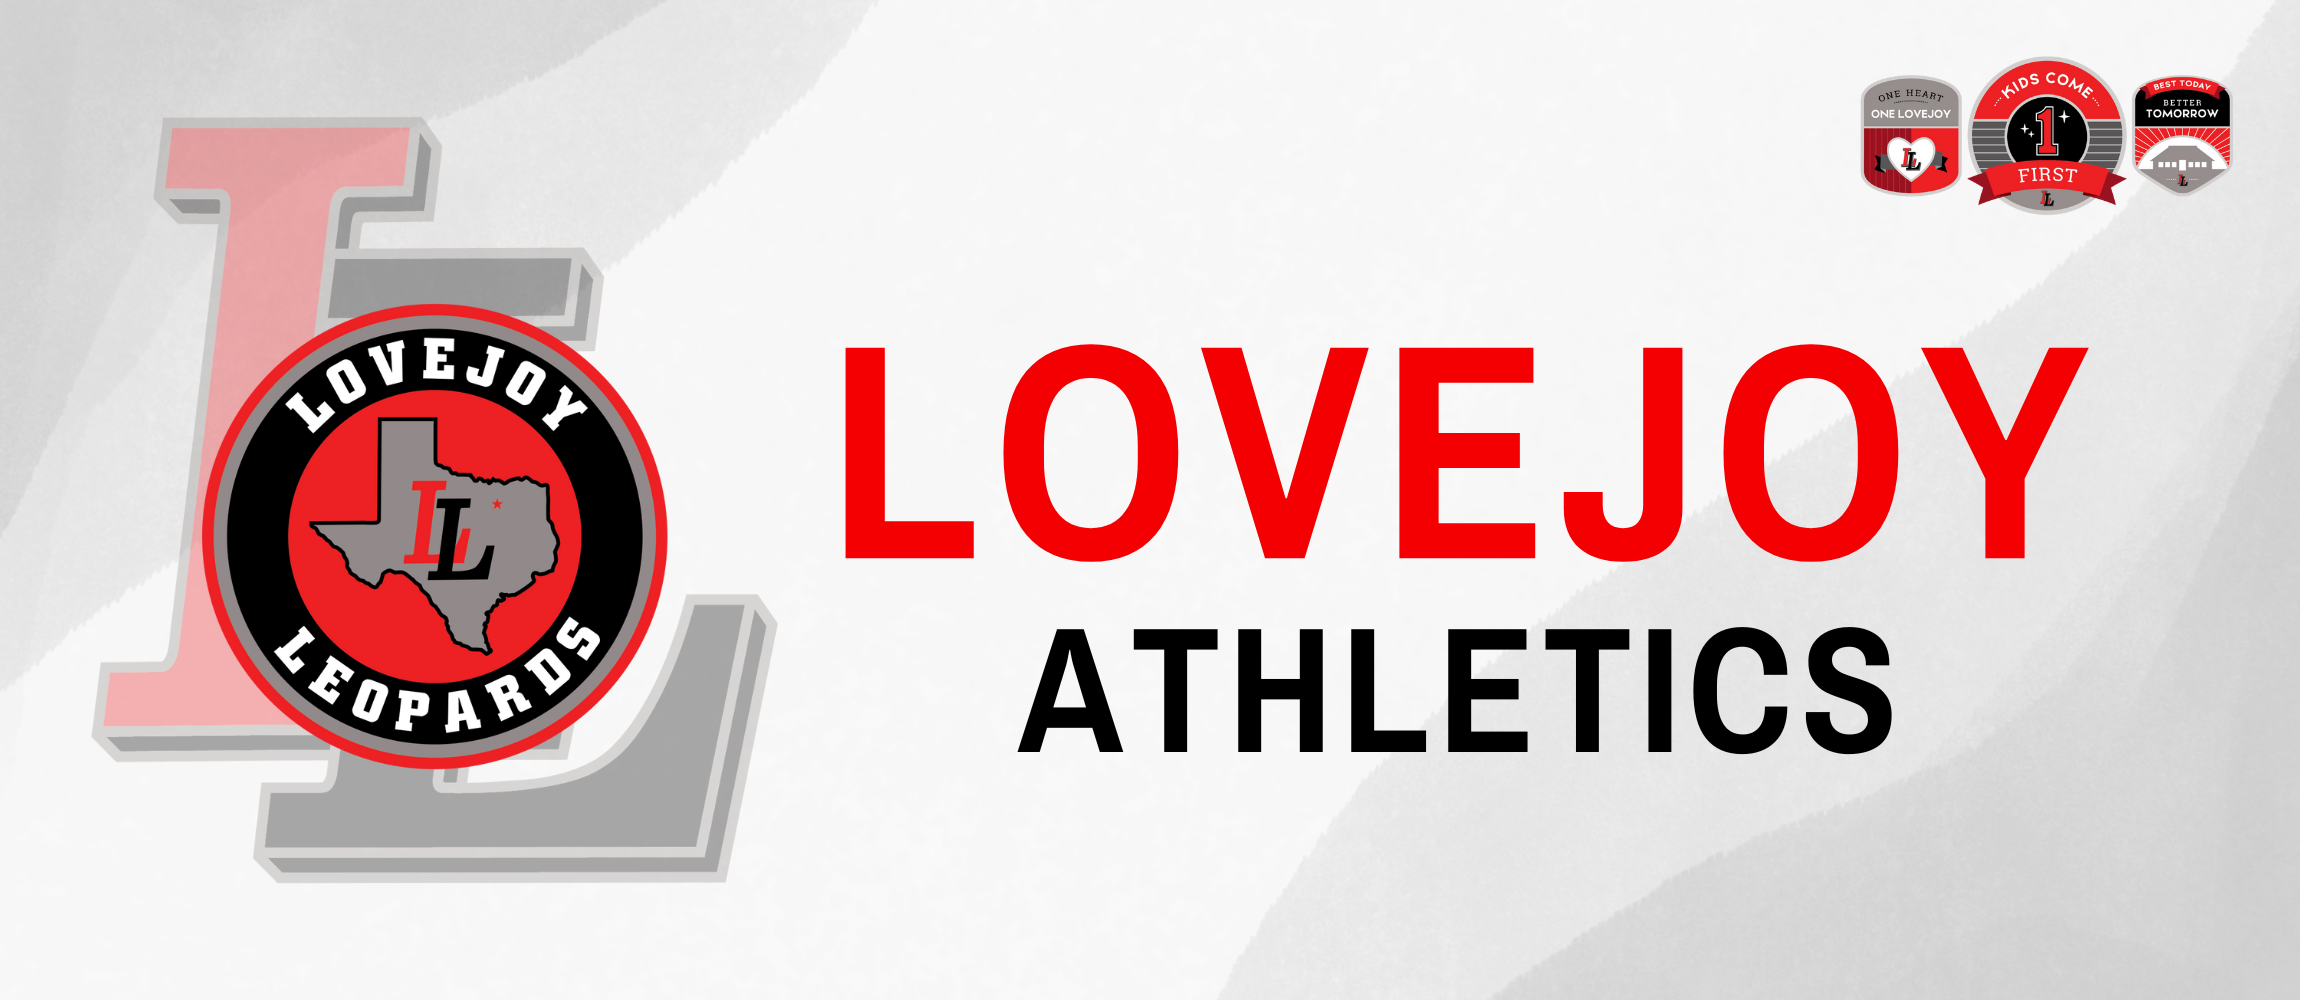 Lovejoy Athletics